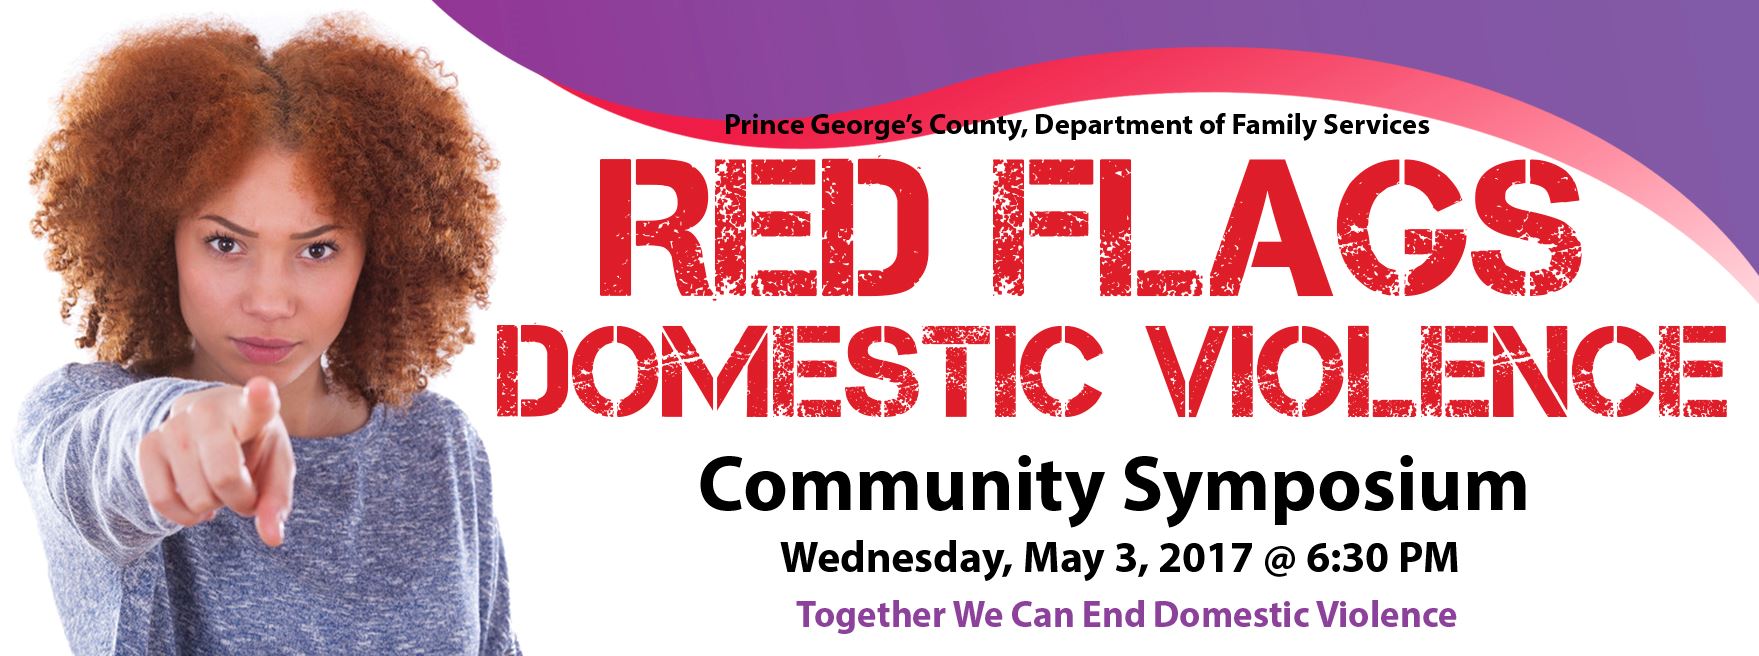 Domestic Violence Community Symposium